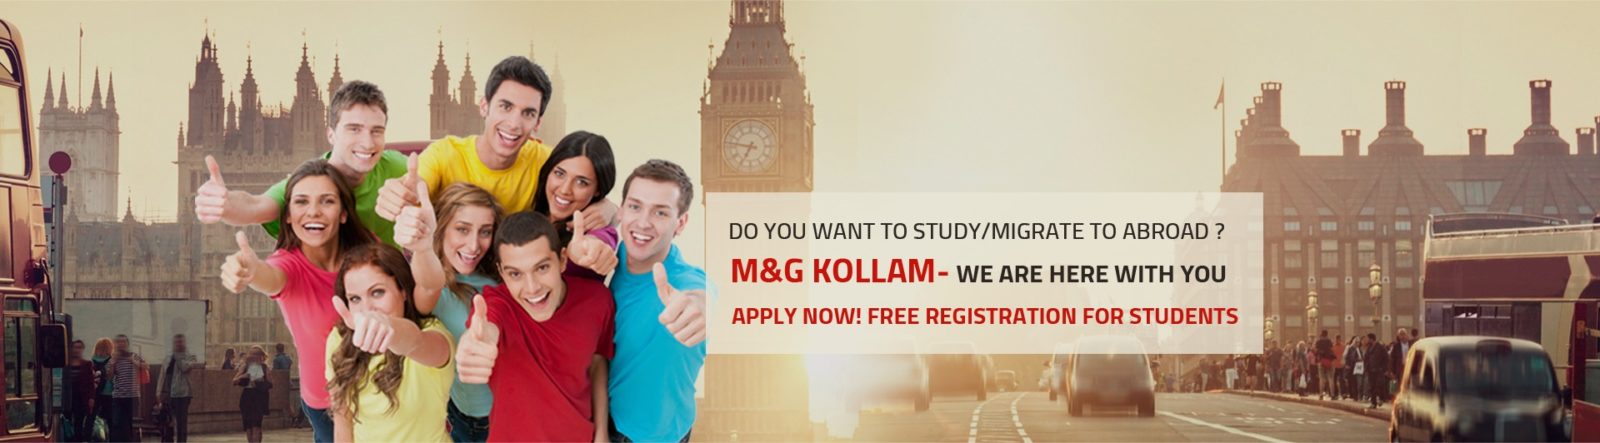 M&G office at Kollam